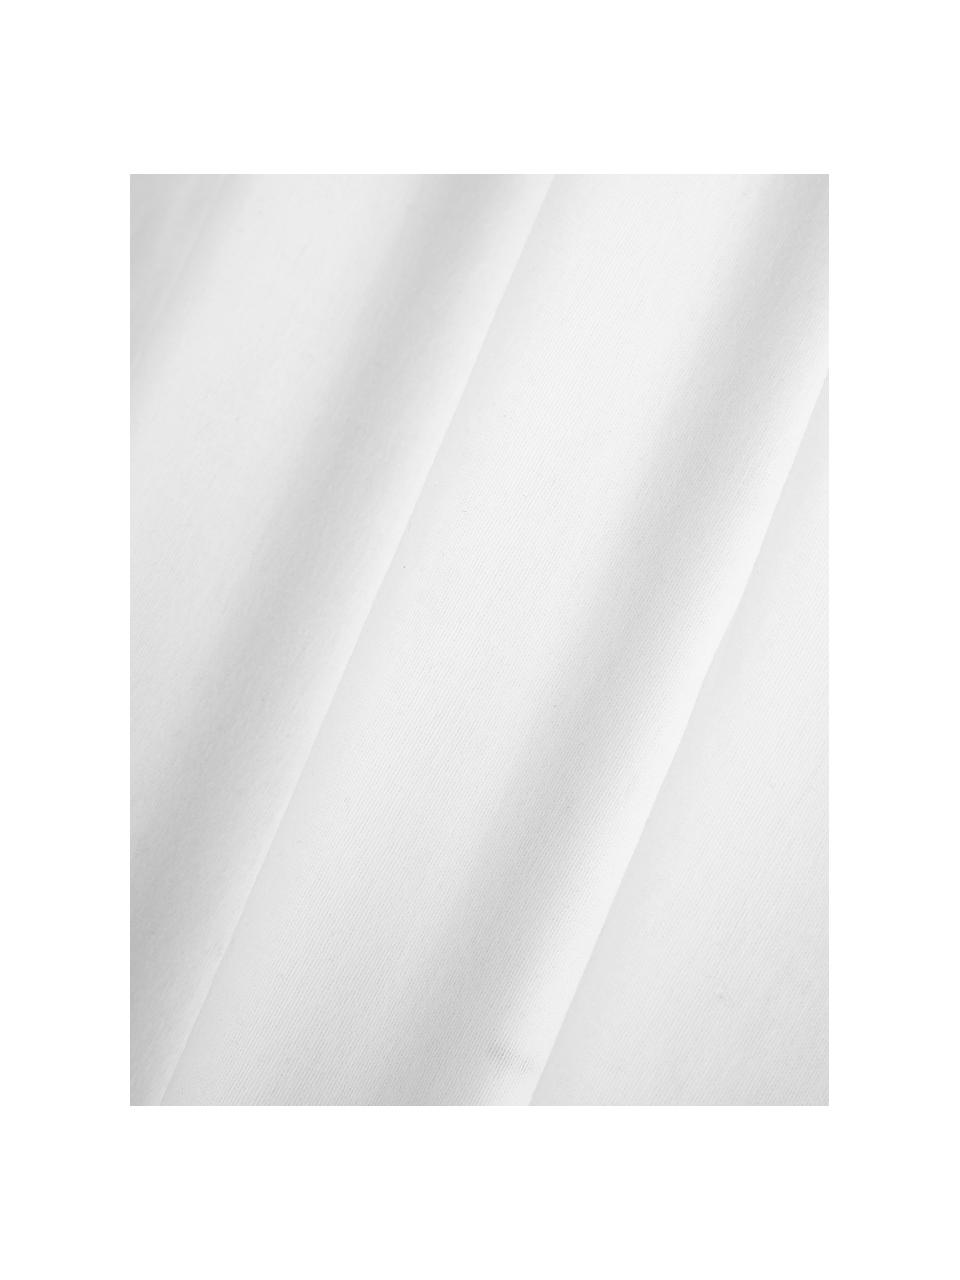 Sábana bajera de franela Biba, Blanco, Cama 200 cm (200 x 200 x 35 cm)